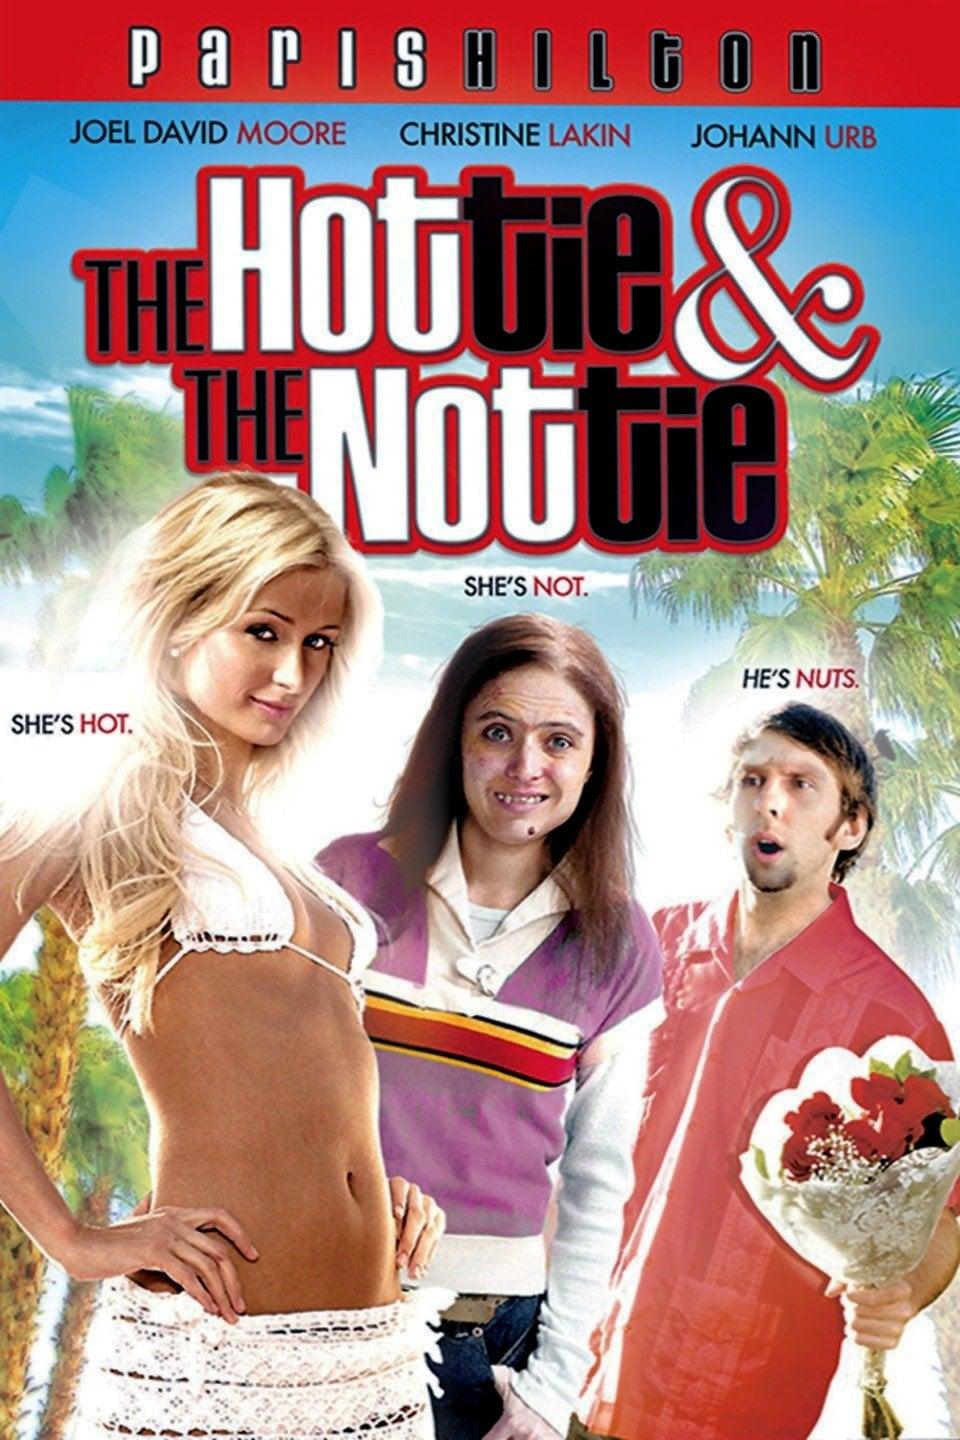 The Hottie & The Nottie poster